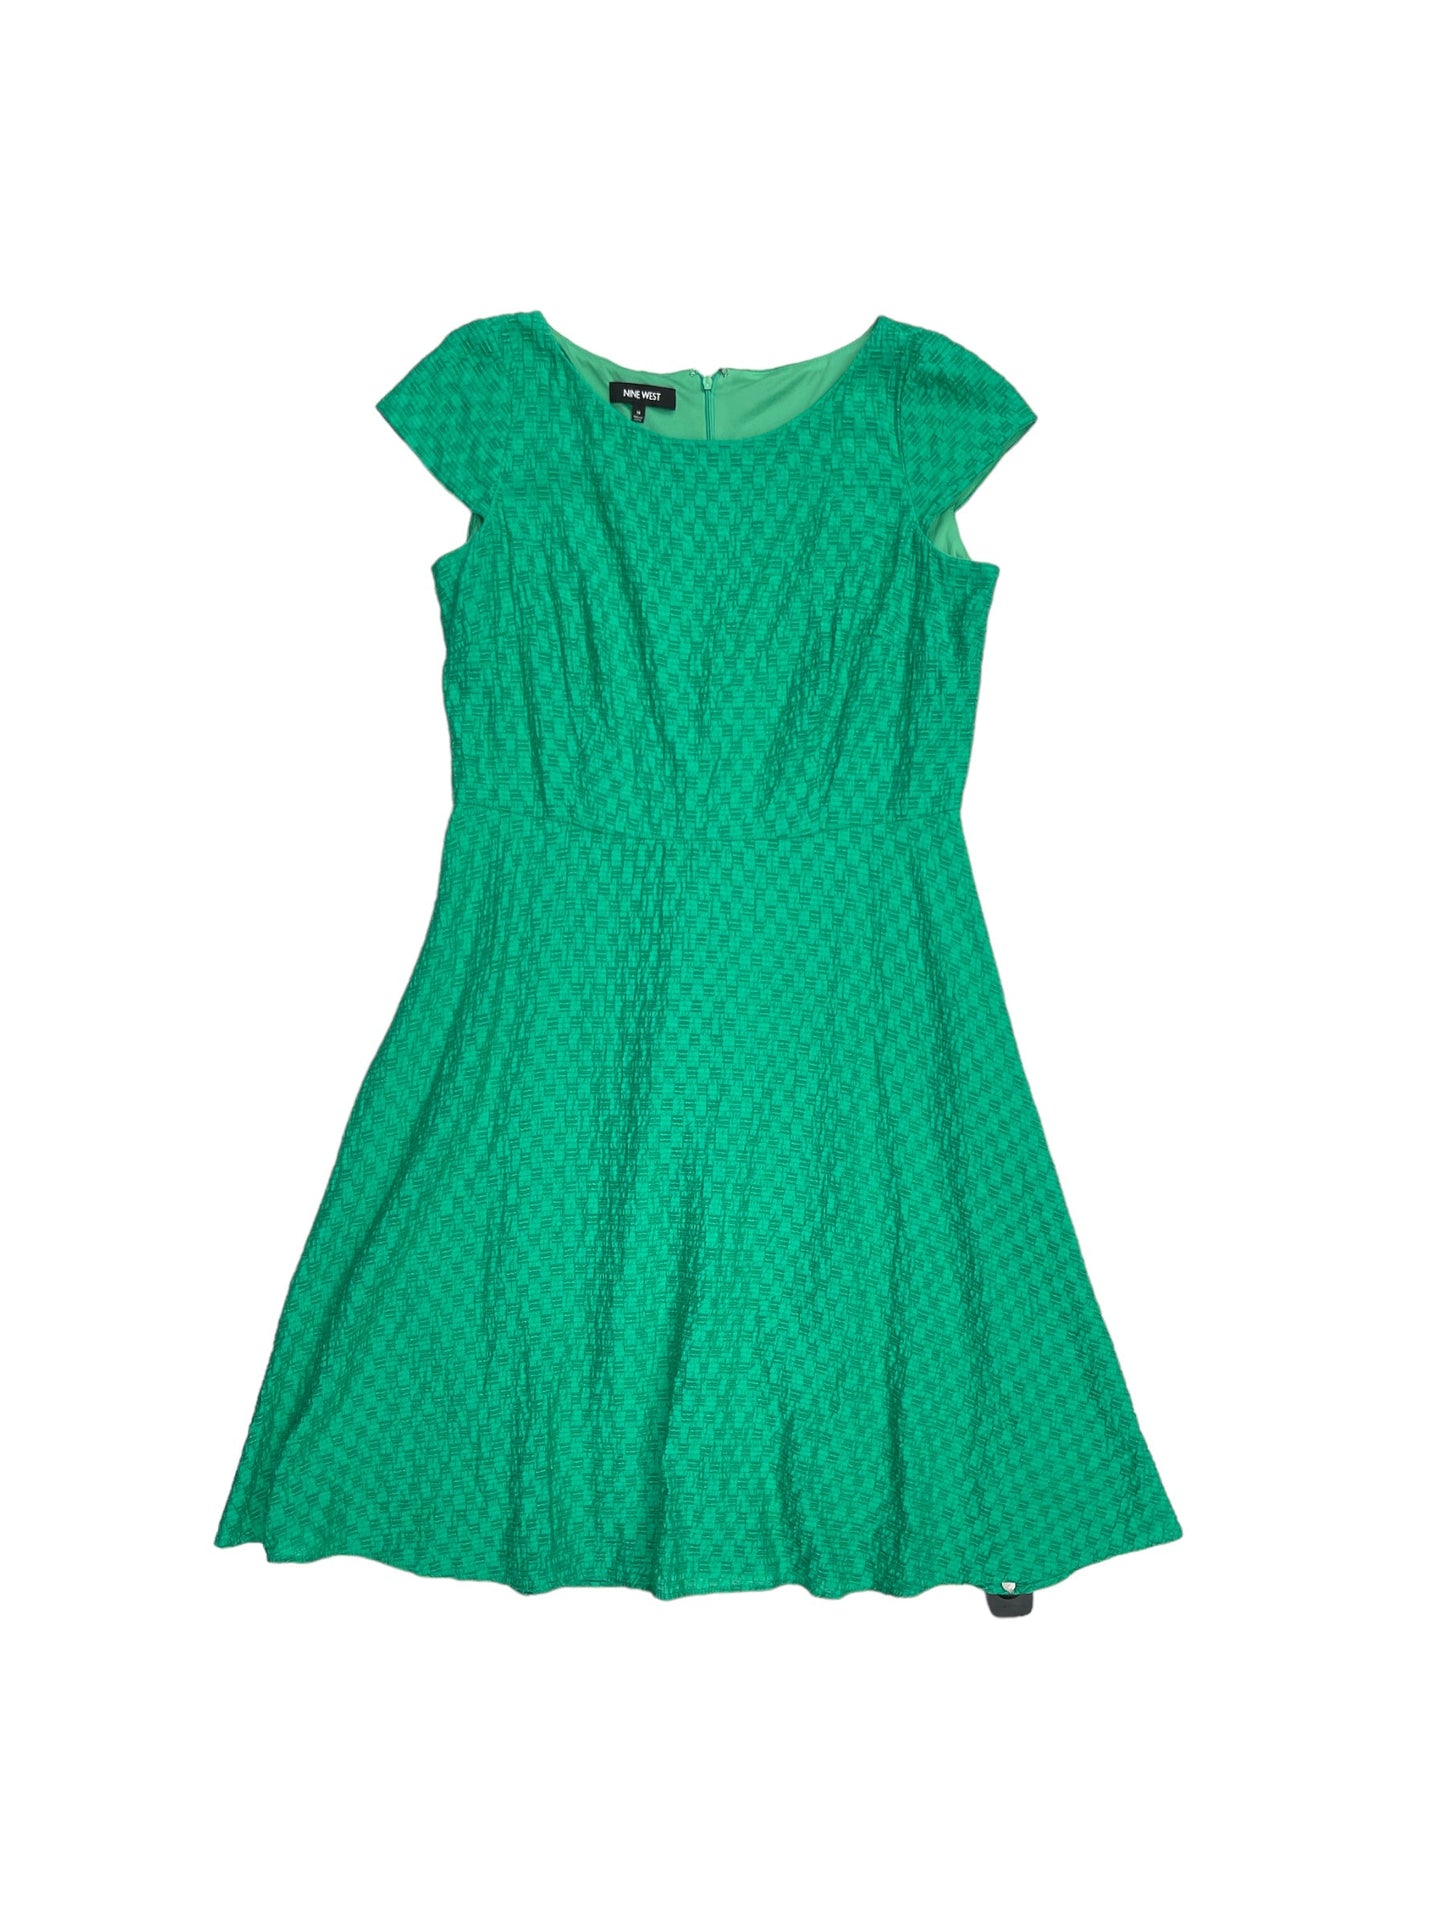 Green Dress Casual Midi Nine West, Size 14